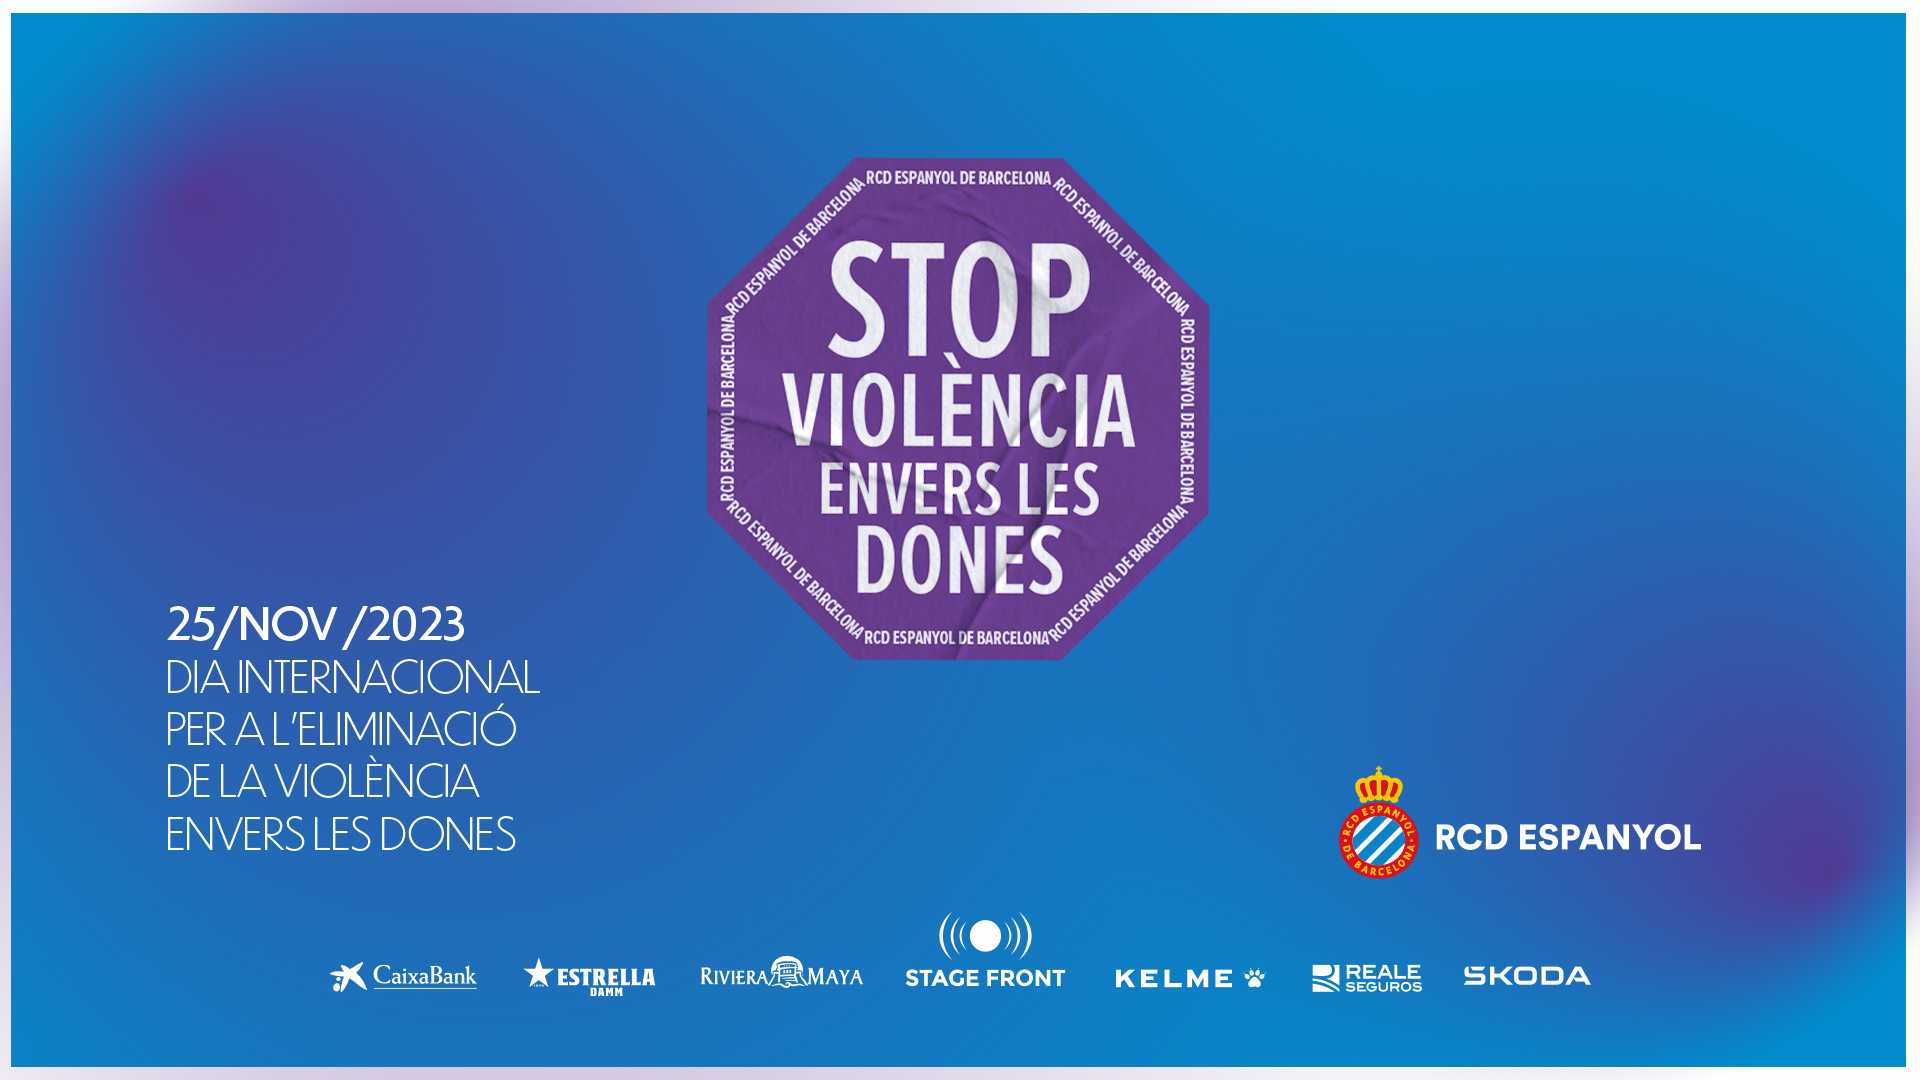 RCD Espanyol against gender violence